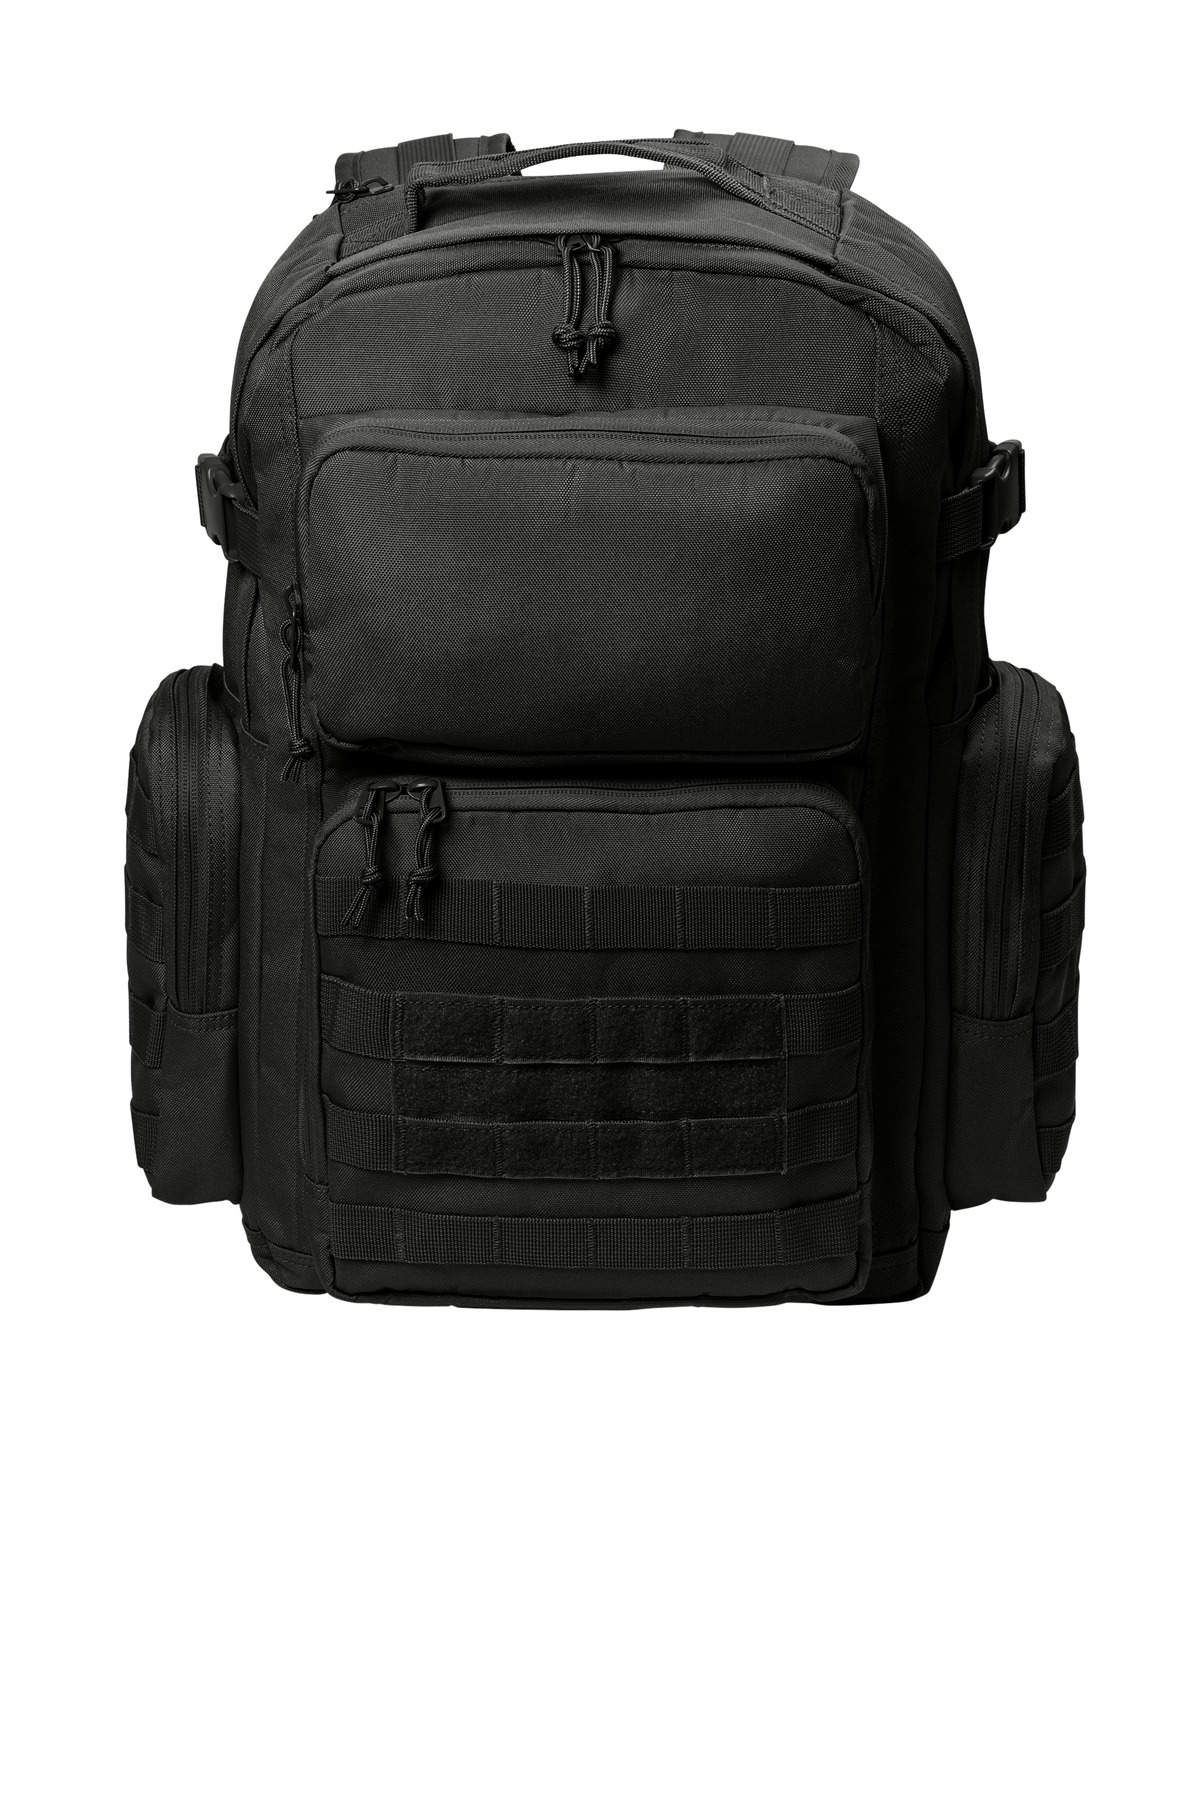 CornerStone Tactical Backpack CSB205